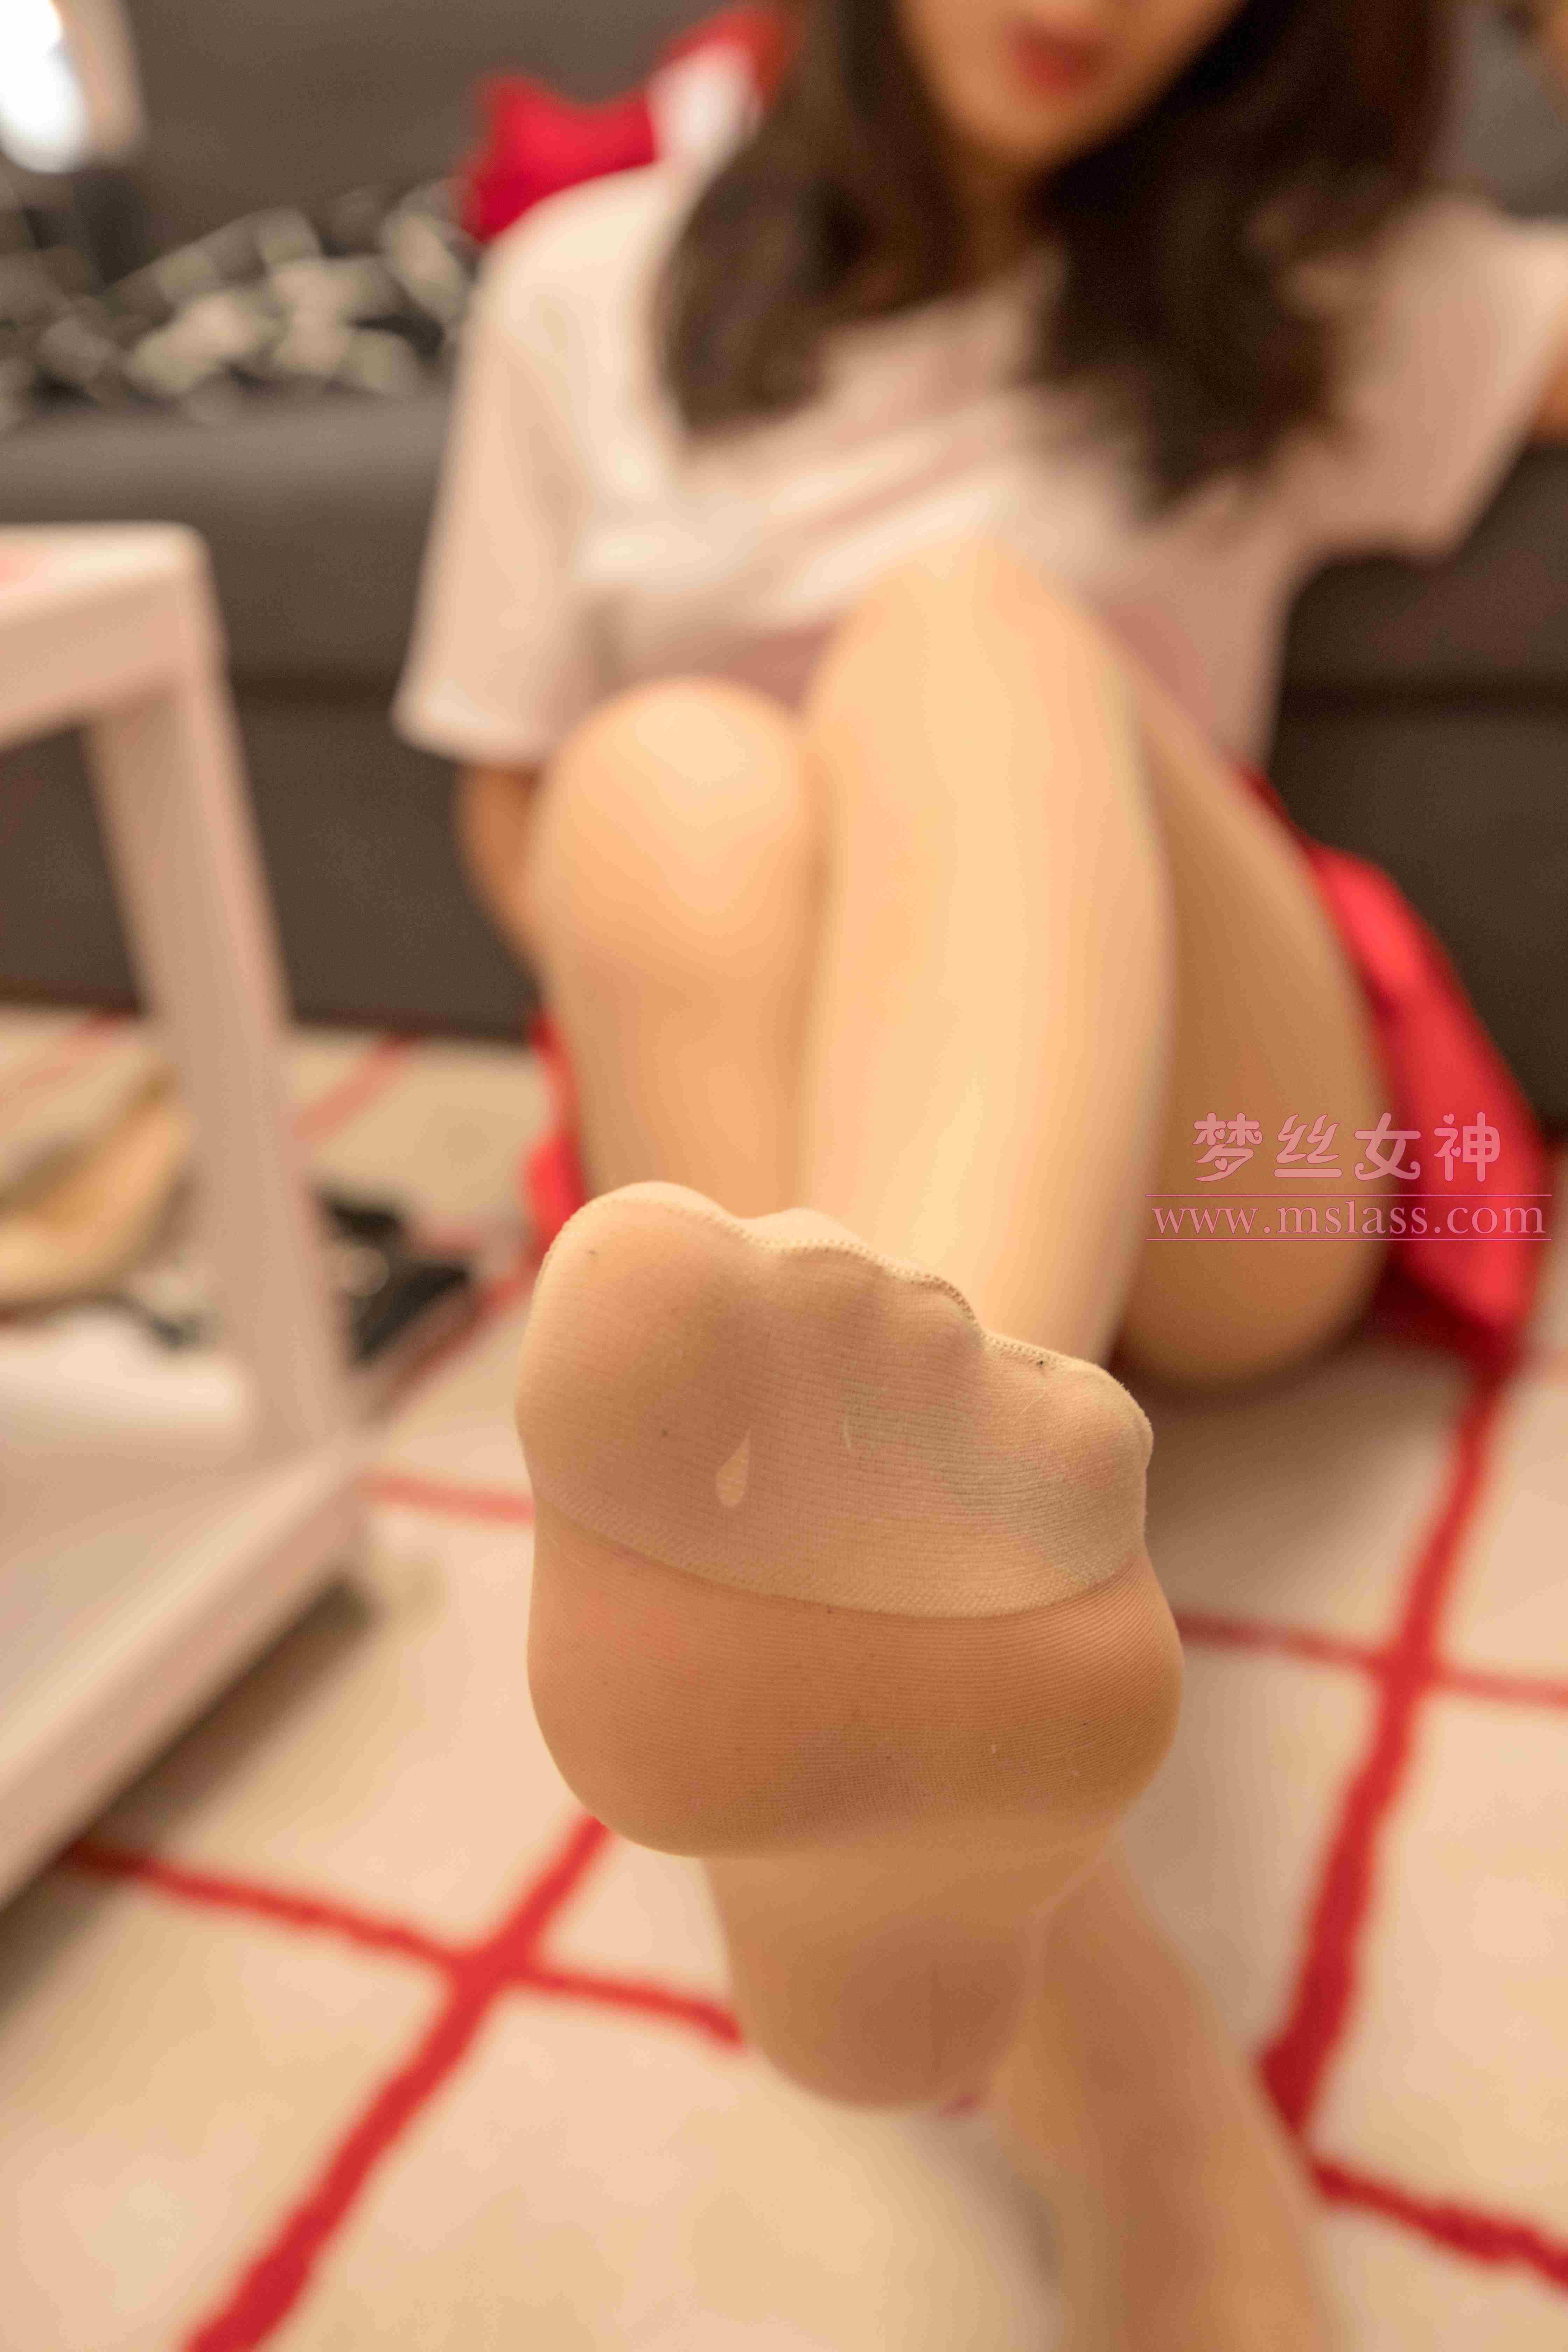 China Beauty Legs and feet 93